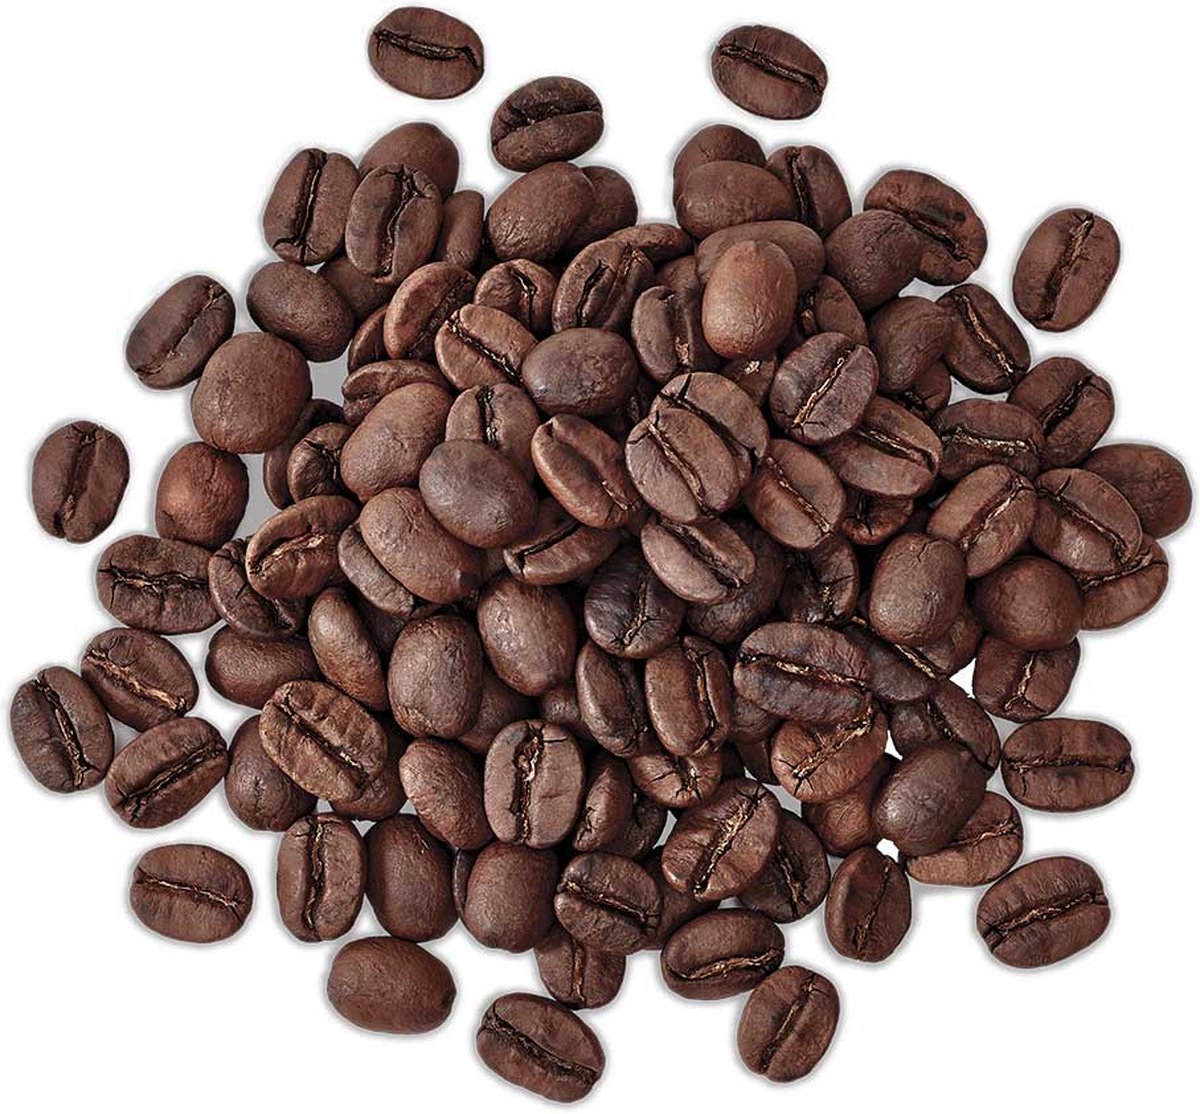 Virunga Coffee Arabica 85+ Bonen - 4 x 250g - Fairtrade & Biologische Koffie Congo kivu